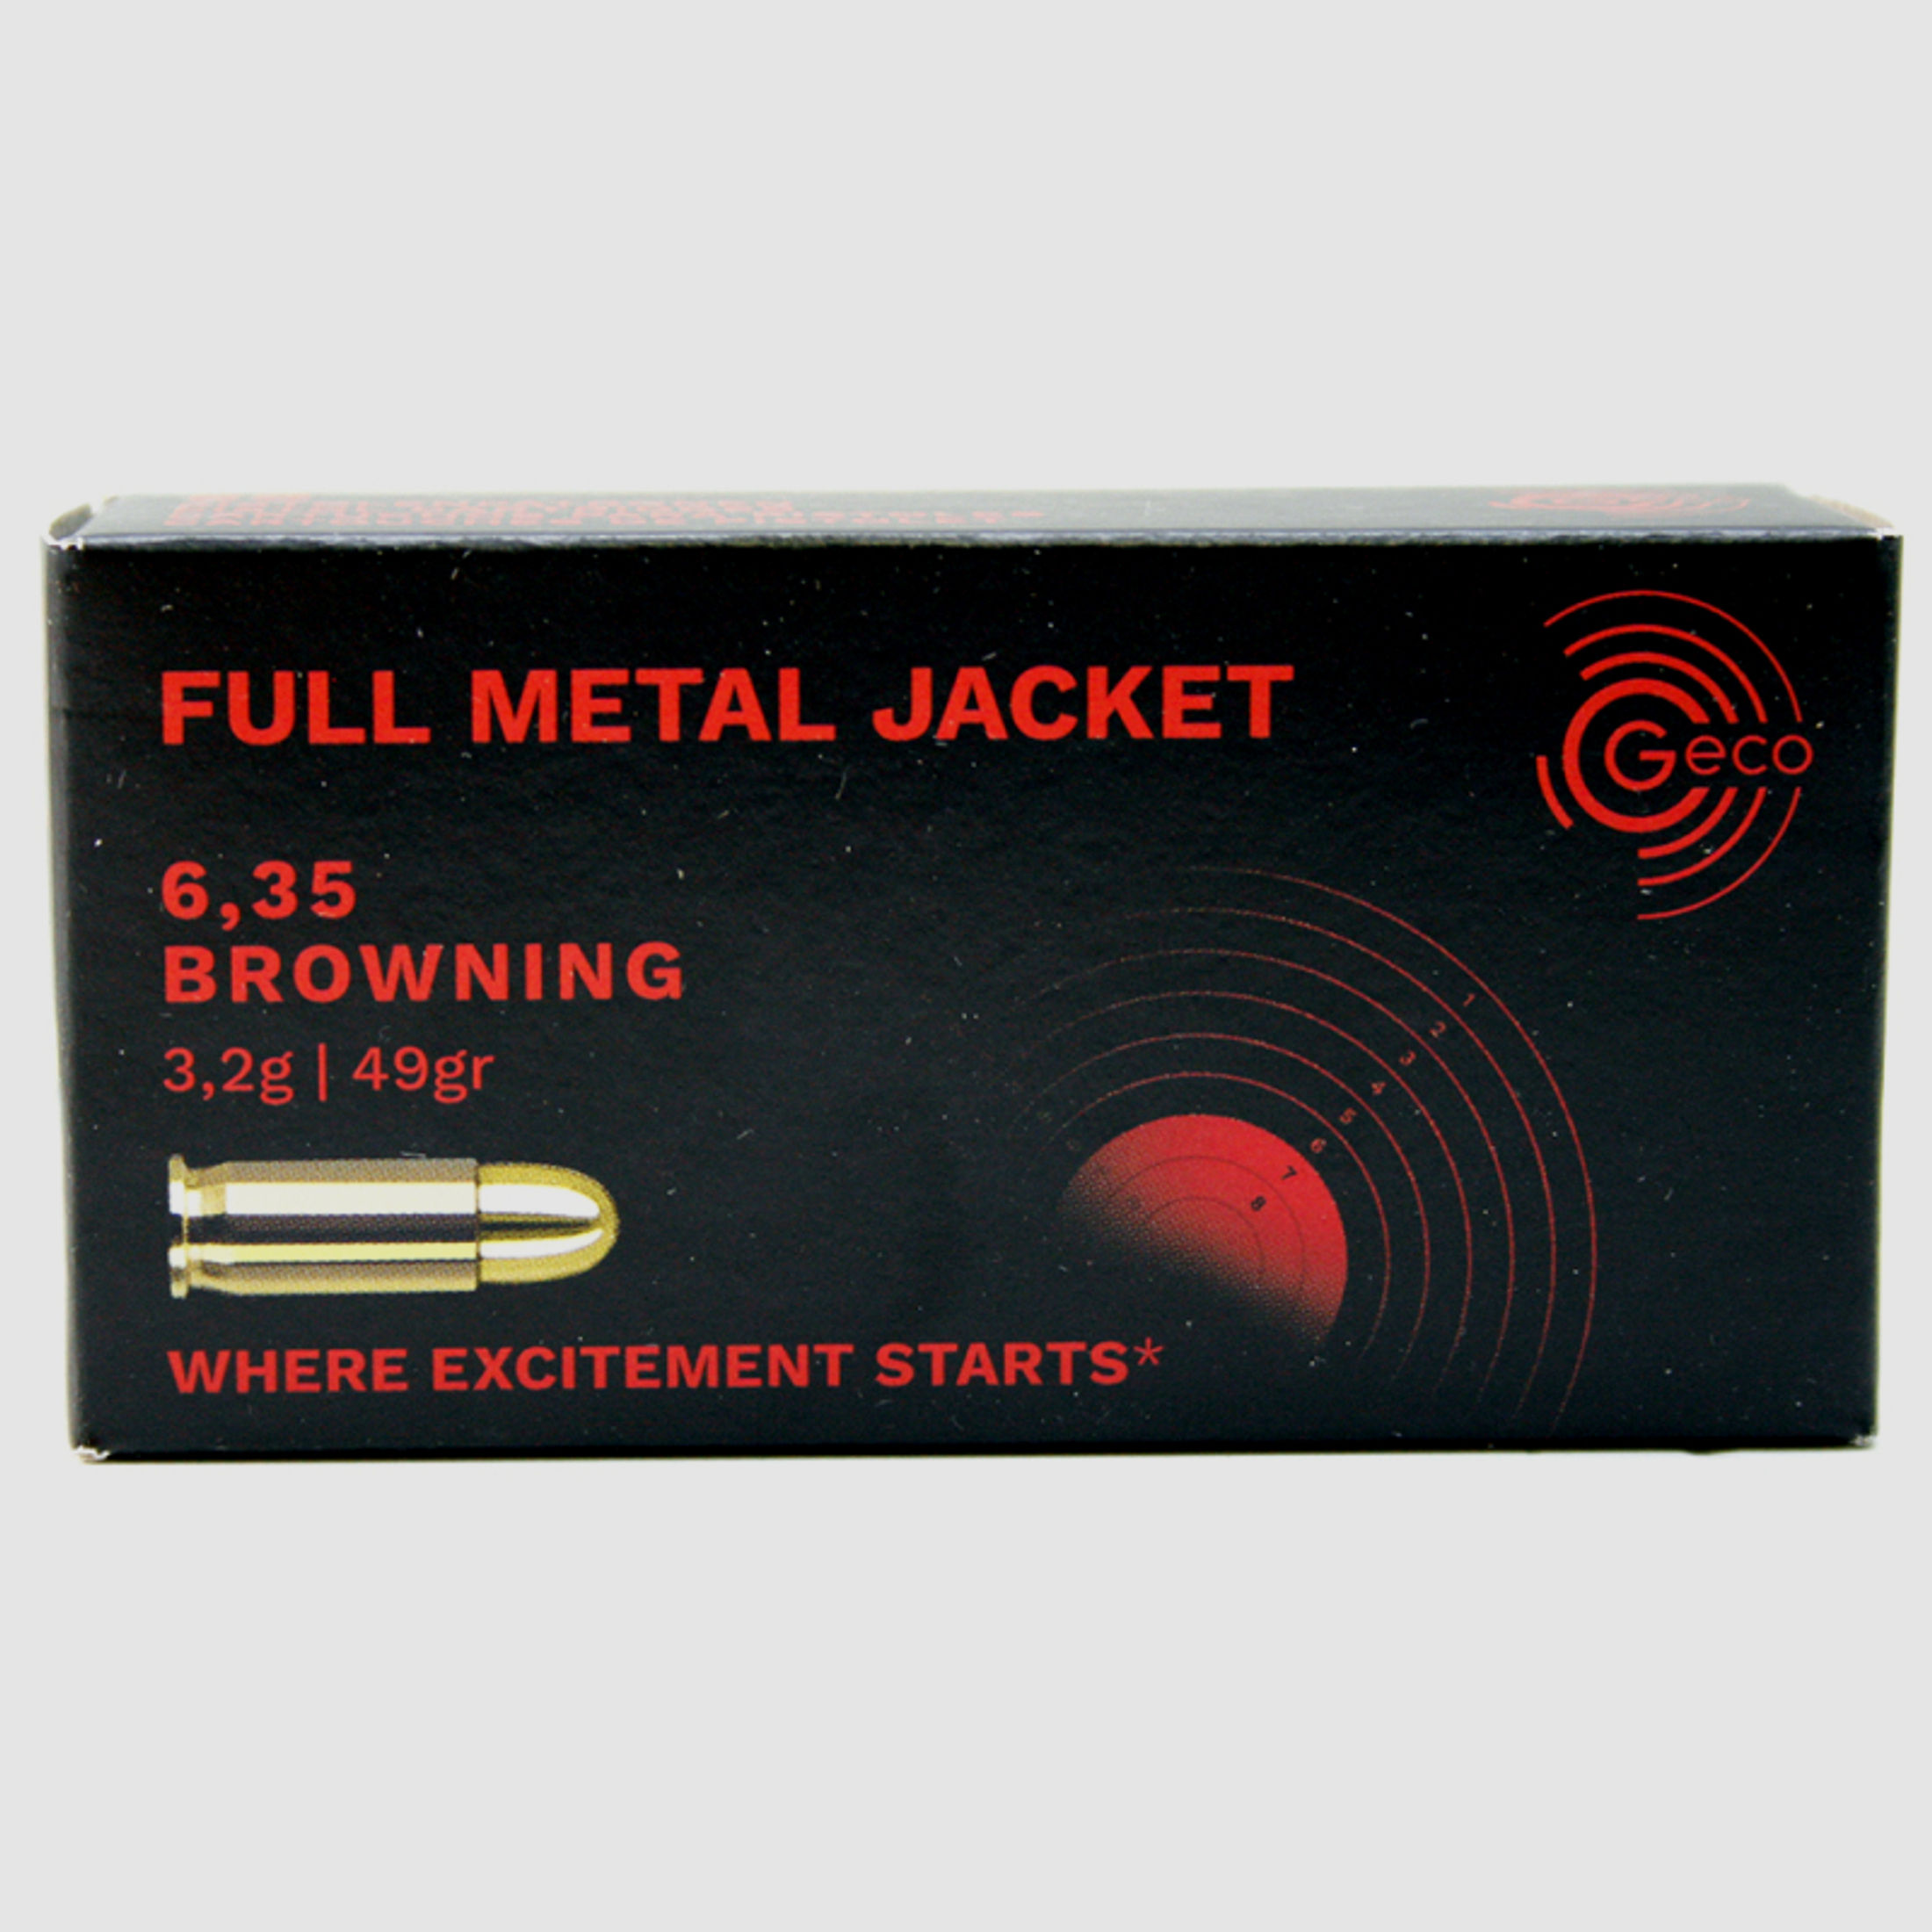 50 Schuss GECO Pistolenpatronen 6,35MM Browning Munition | 3,2g 49gr FMJ Full Metal Jacket made in I